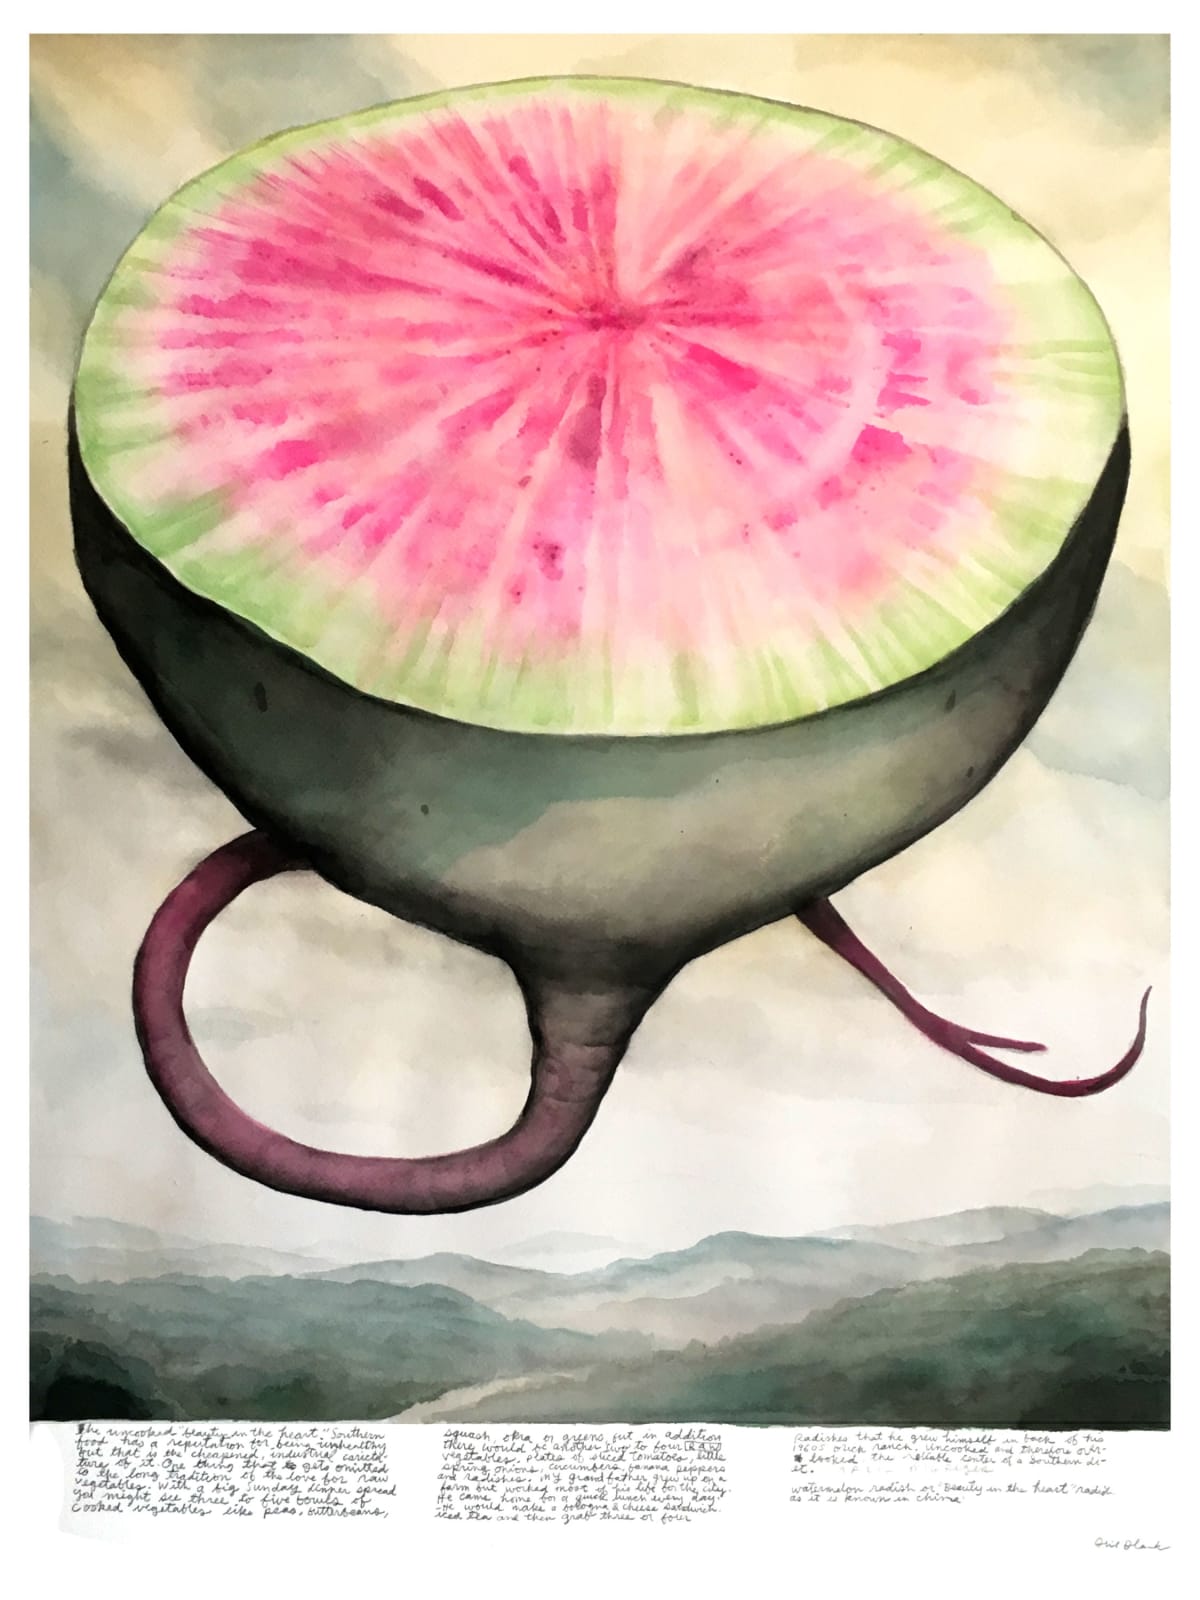 Phil Blank, Watermelon Radish